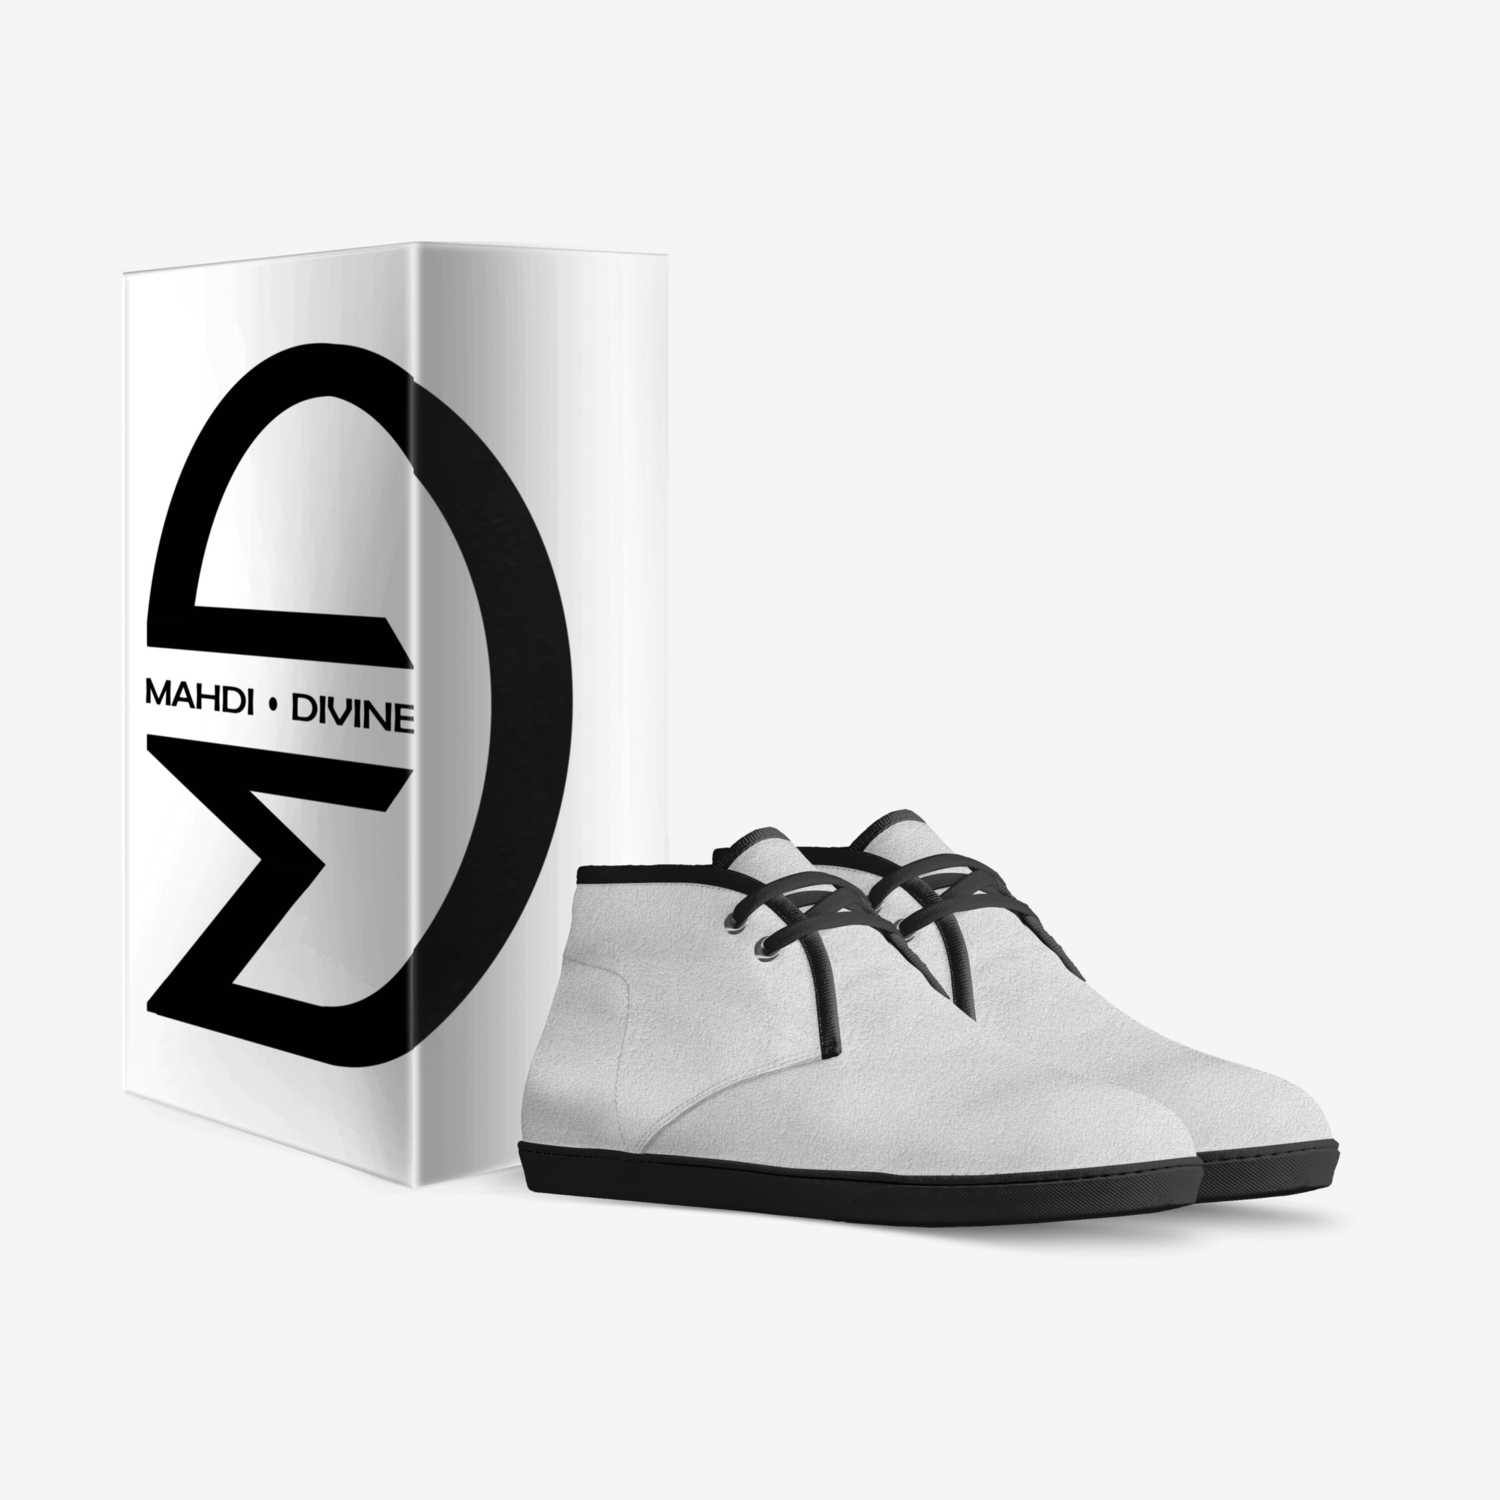 WHITE CHUKK custom made in Italy shoes by Mahdi Divine | Box view